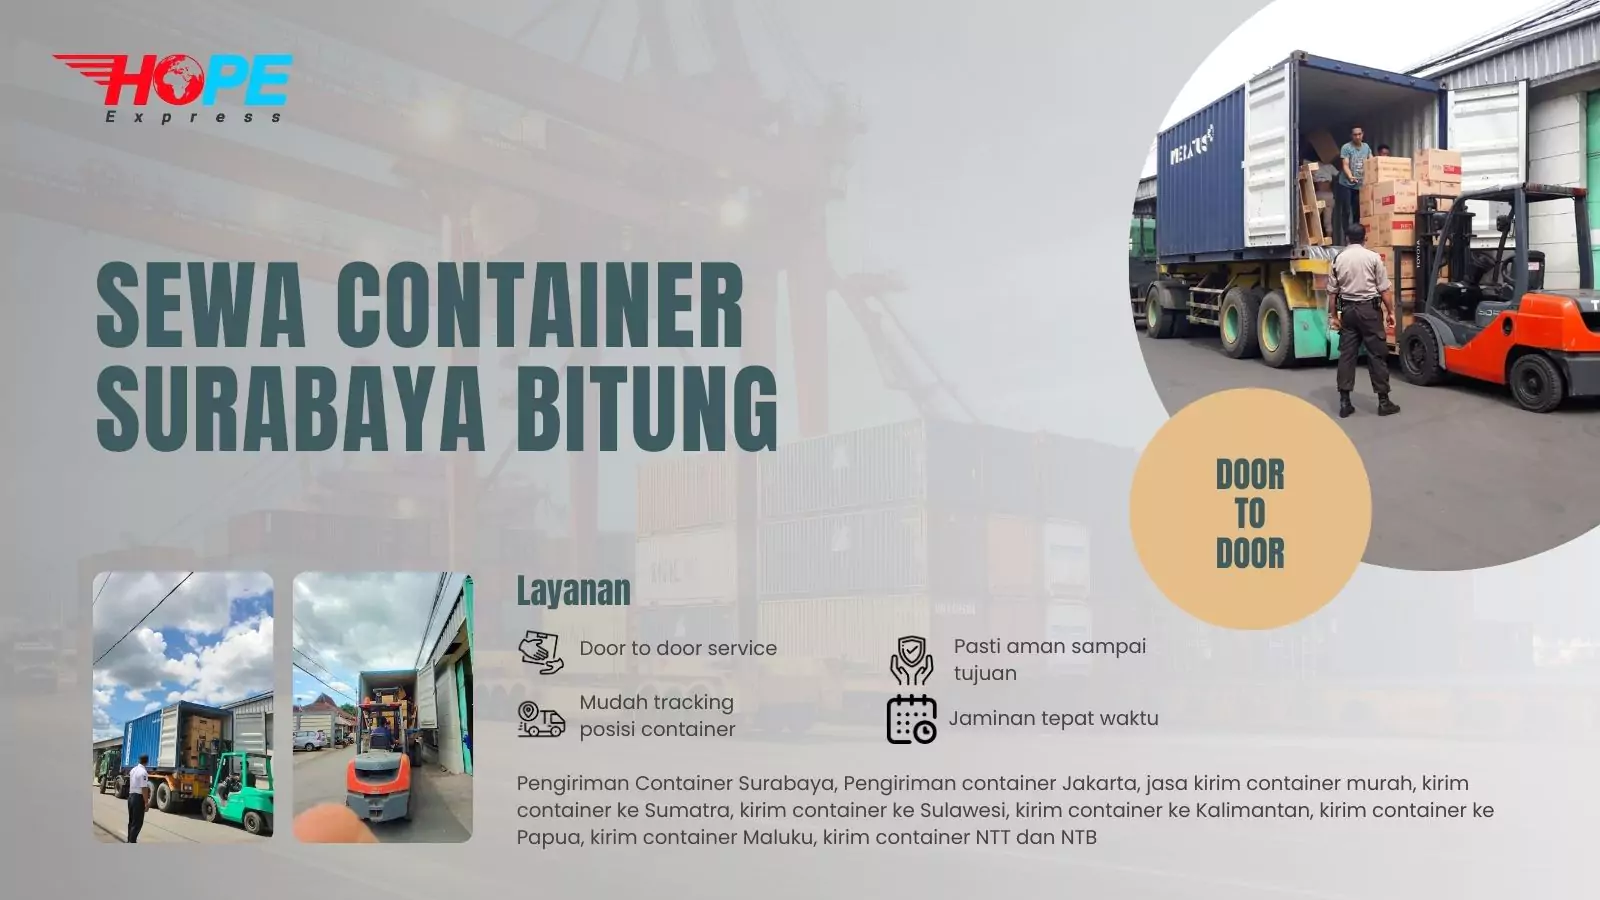 Sewa Container Surabaya Bitung